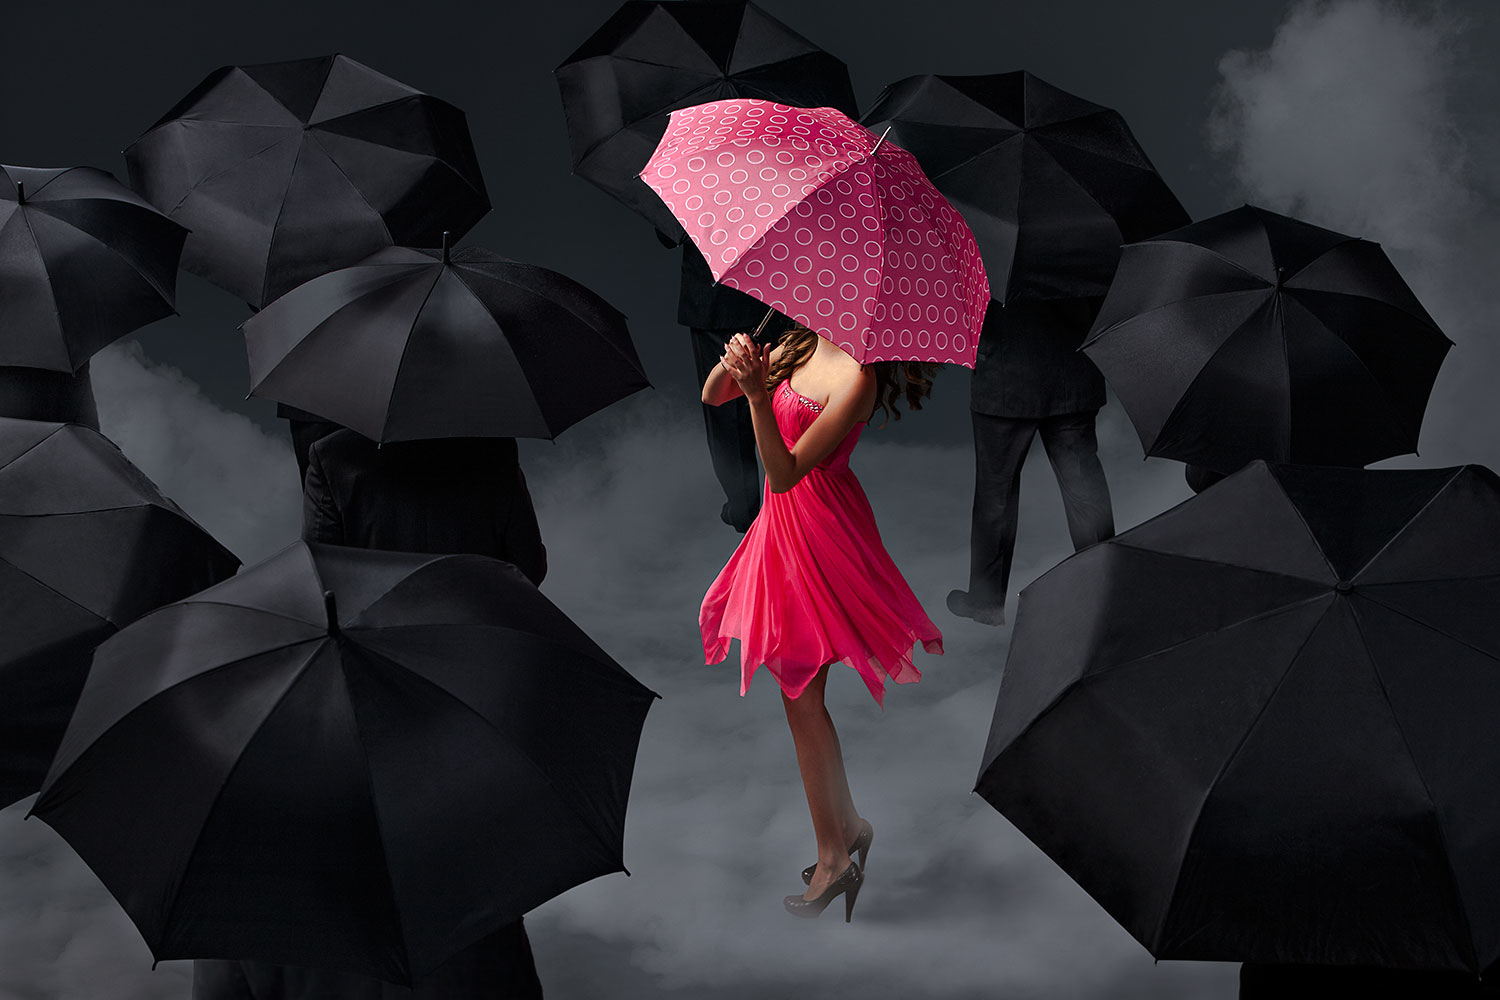 Umbrella photo for Roche pharmaceuticals